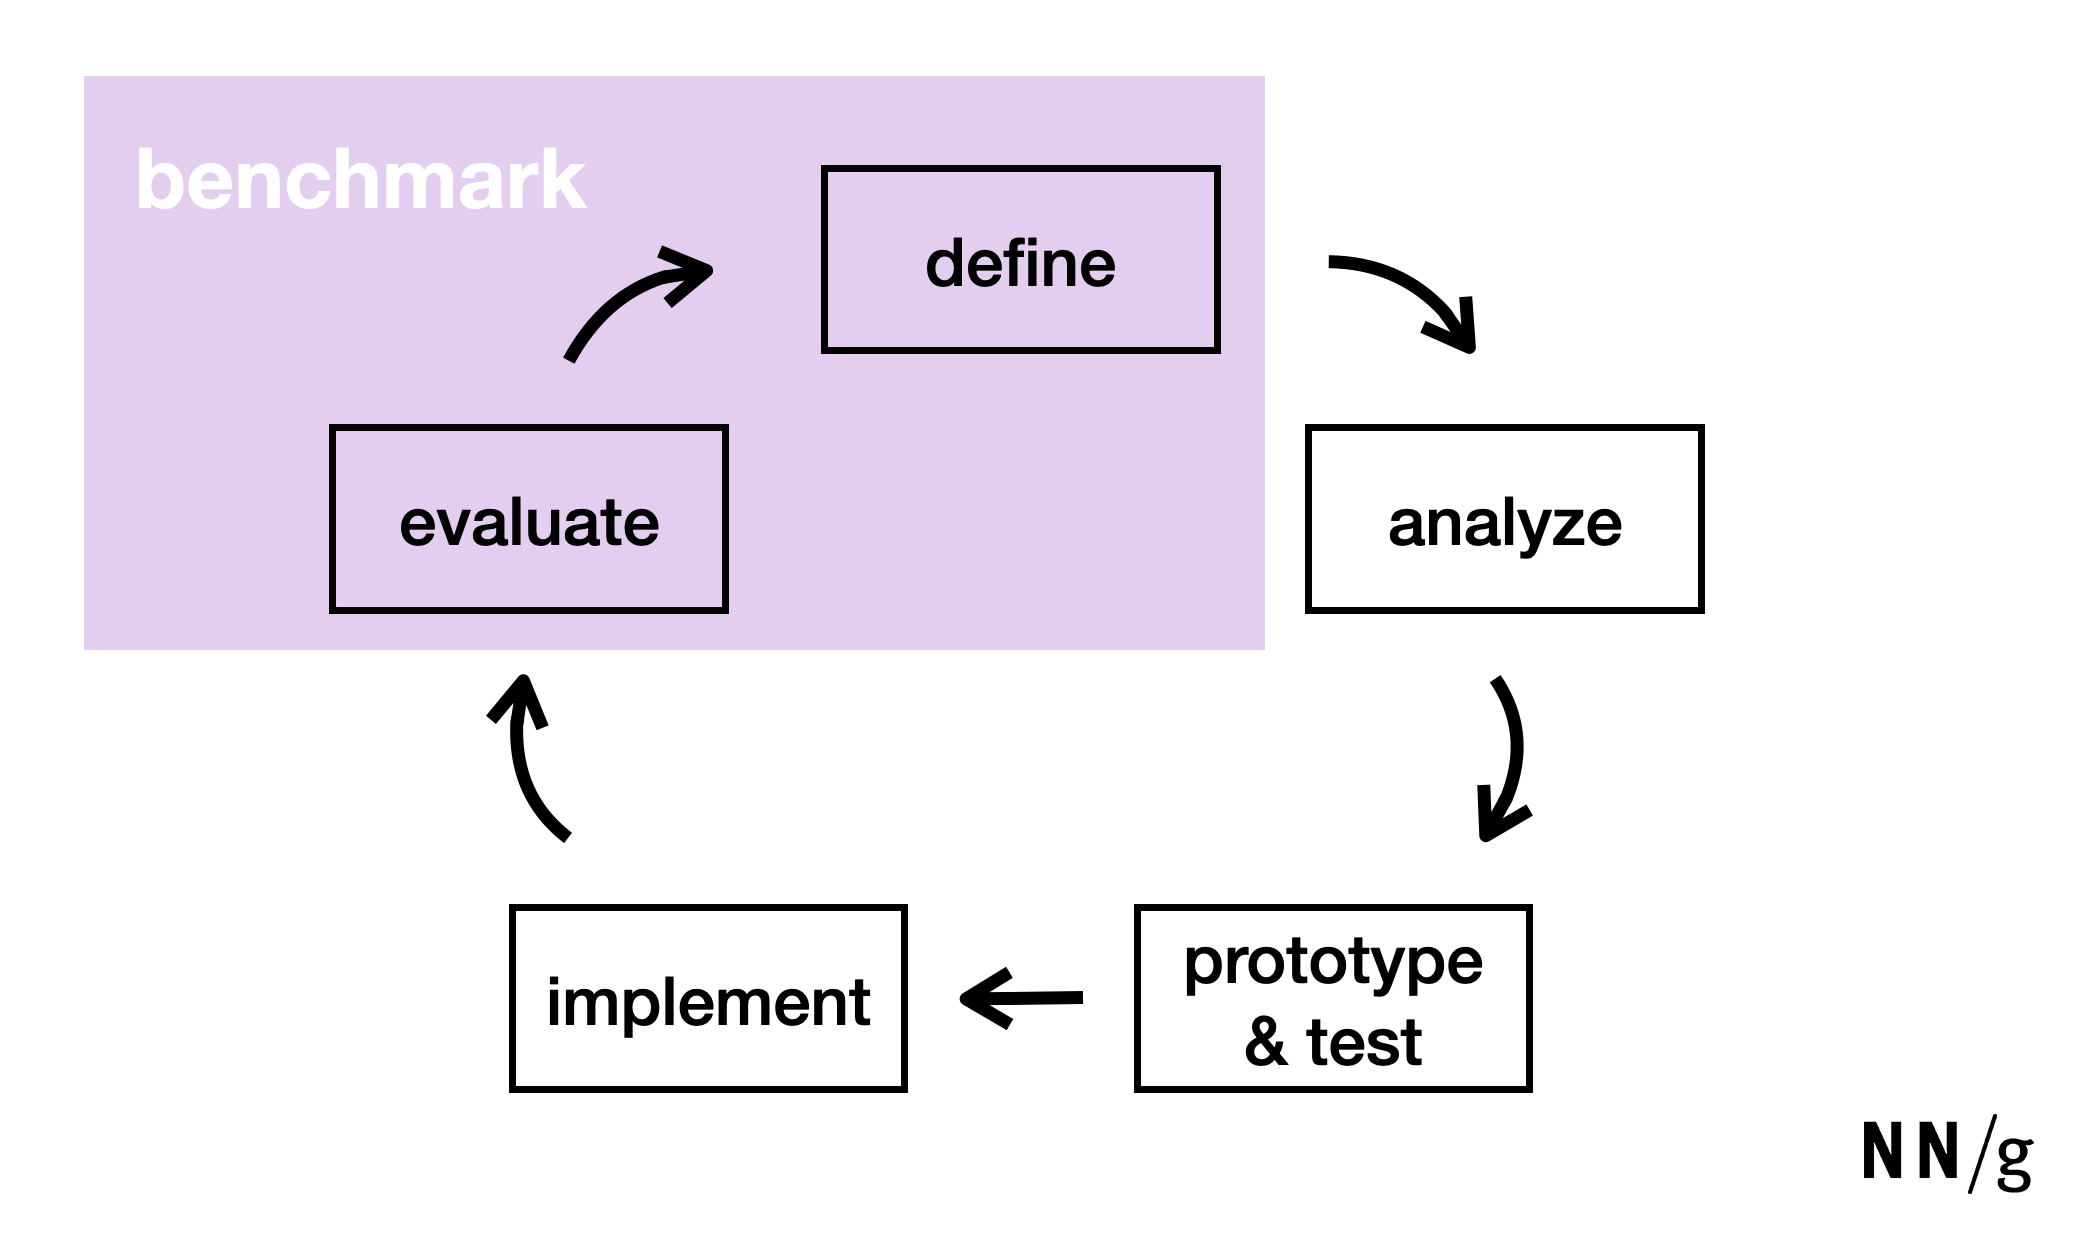 design-process-benchmarking.png